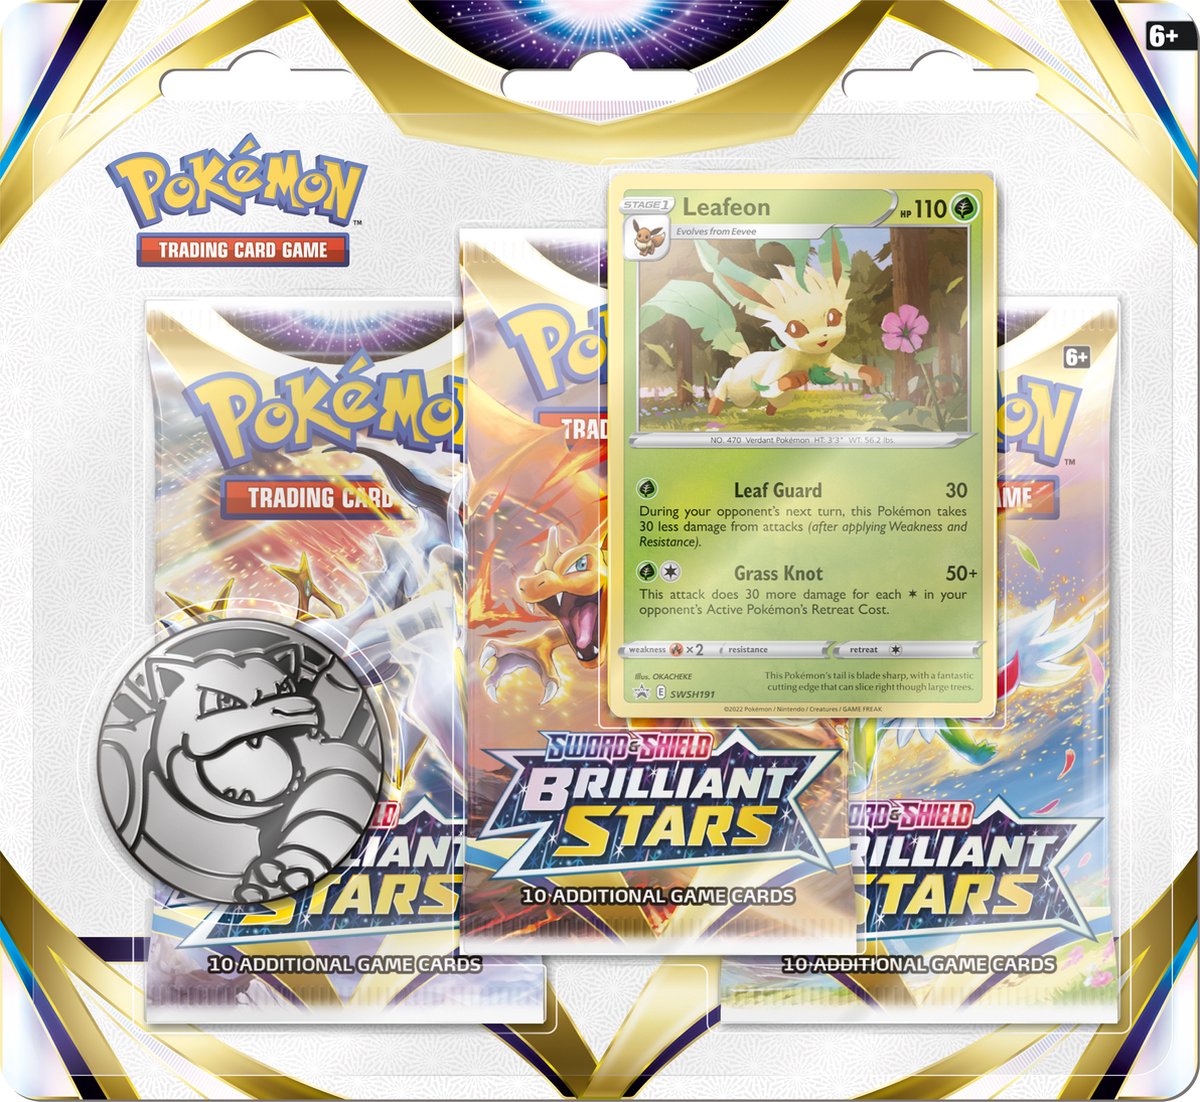 Pokémon Sword & Shield Brilliant Stars 3BoosterBlister - Leafeon - Pokémon Kaarten